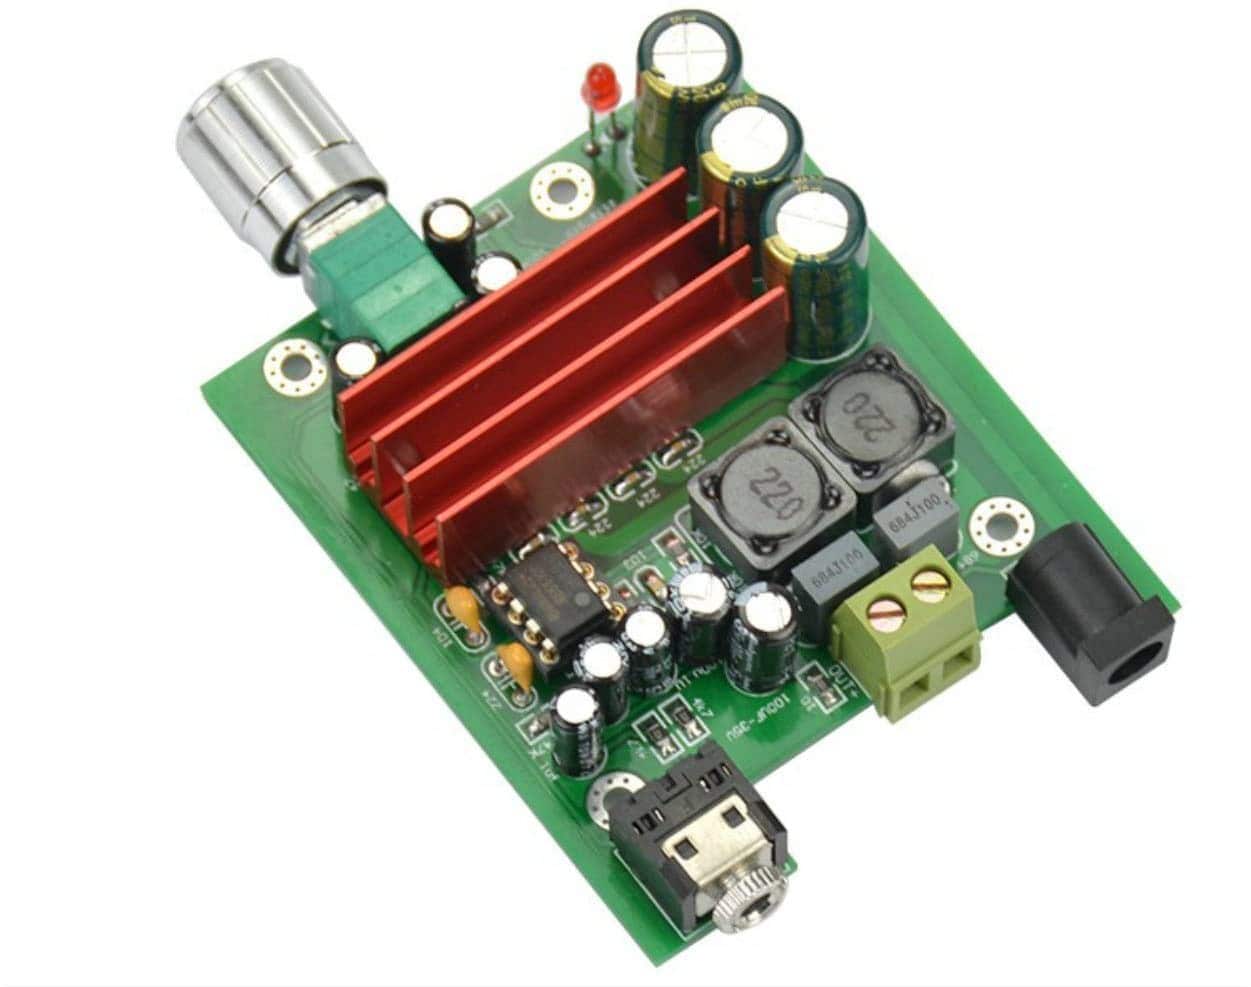 TPA3116 Subwoofer Digital Power Amplifier Board, 100W TPA3116D2 Amplifiers NE5532 subwoofer Plate- RS2566 - REES52